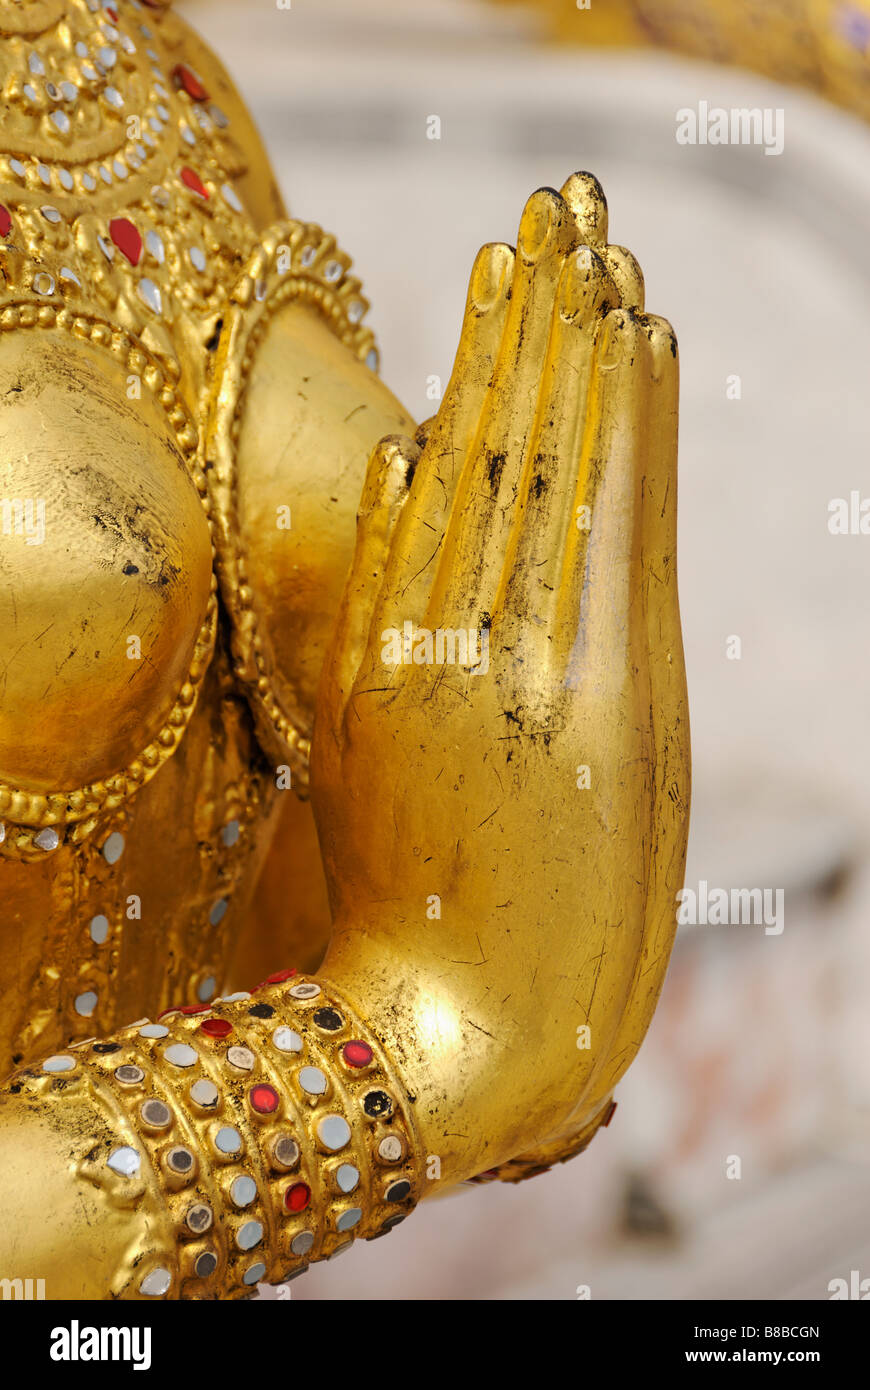 Goldene Kinnara-Statue bilden eine Handbewegung Wai - Wat Phra Kaew und dem Grand Palace in Bangkok Zentralthailand Stockfoto